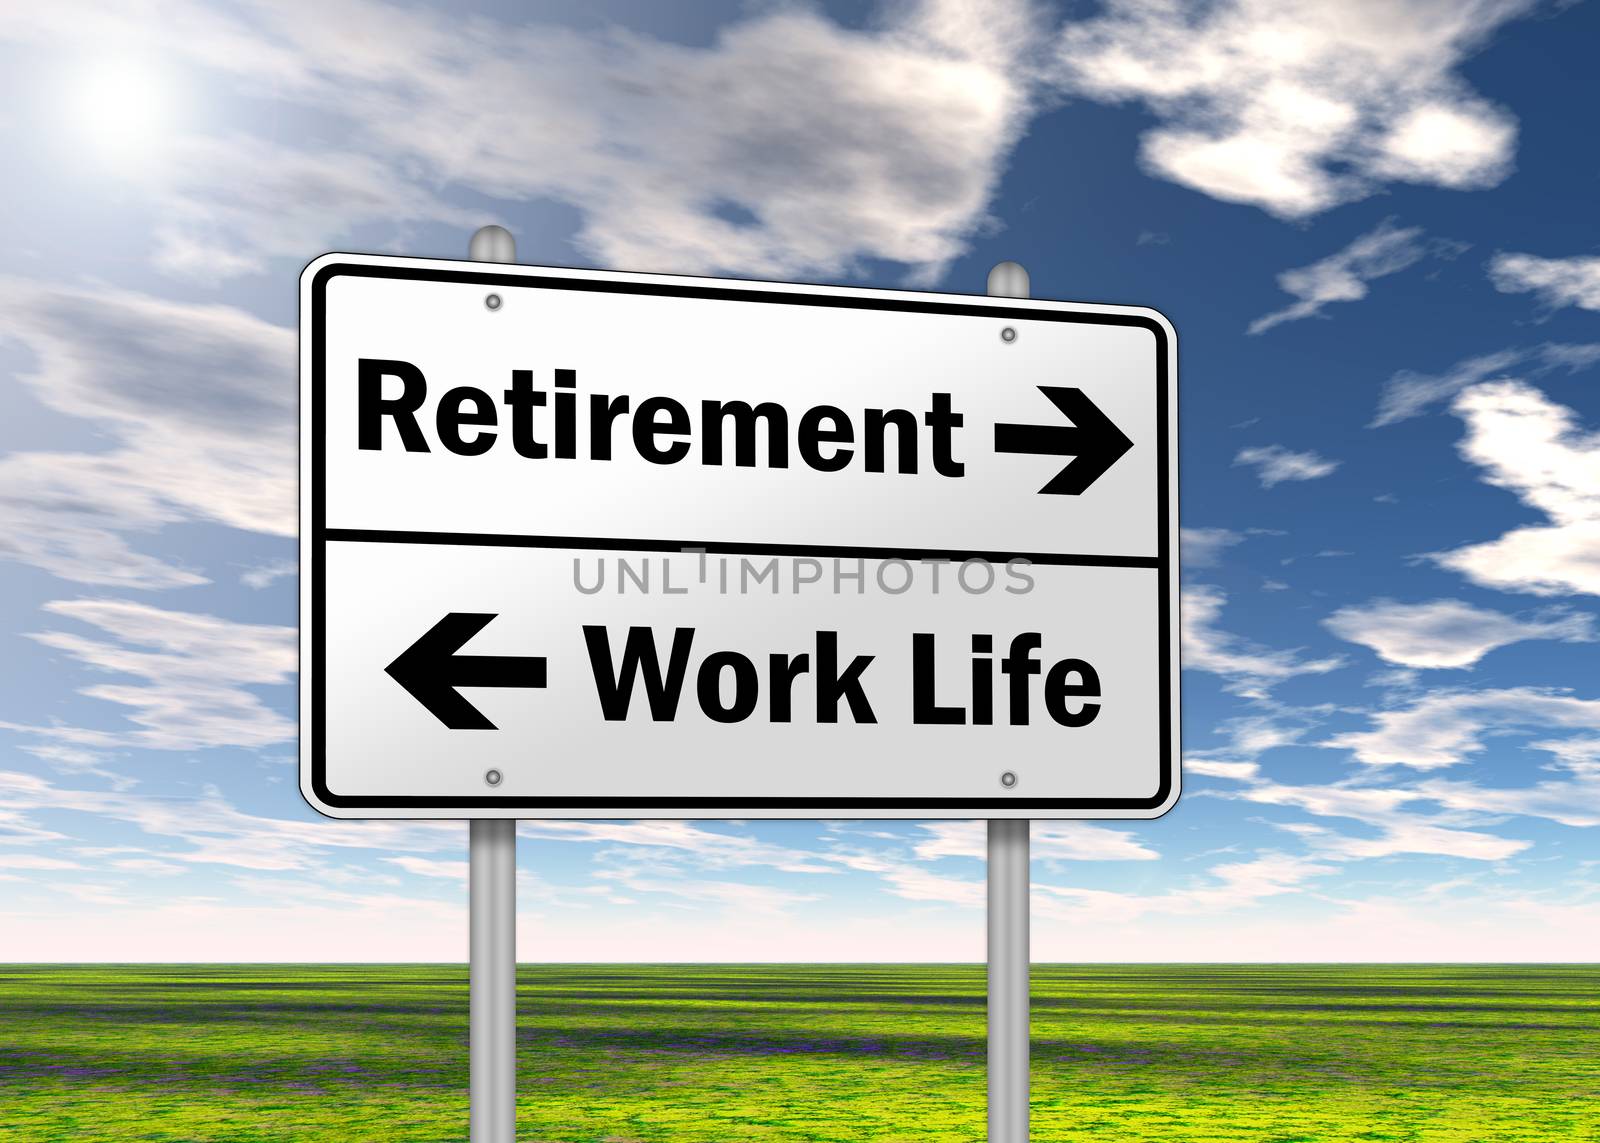 Traffic Sign "Retirement vs. Work Life" by mindscanner